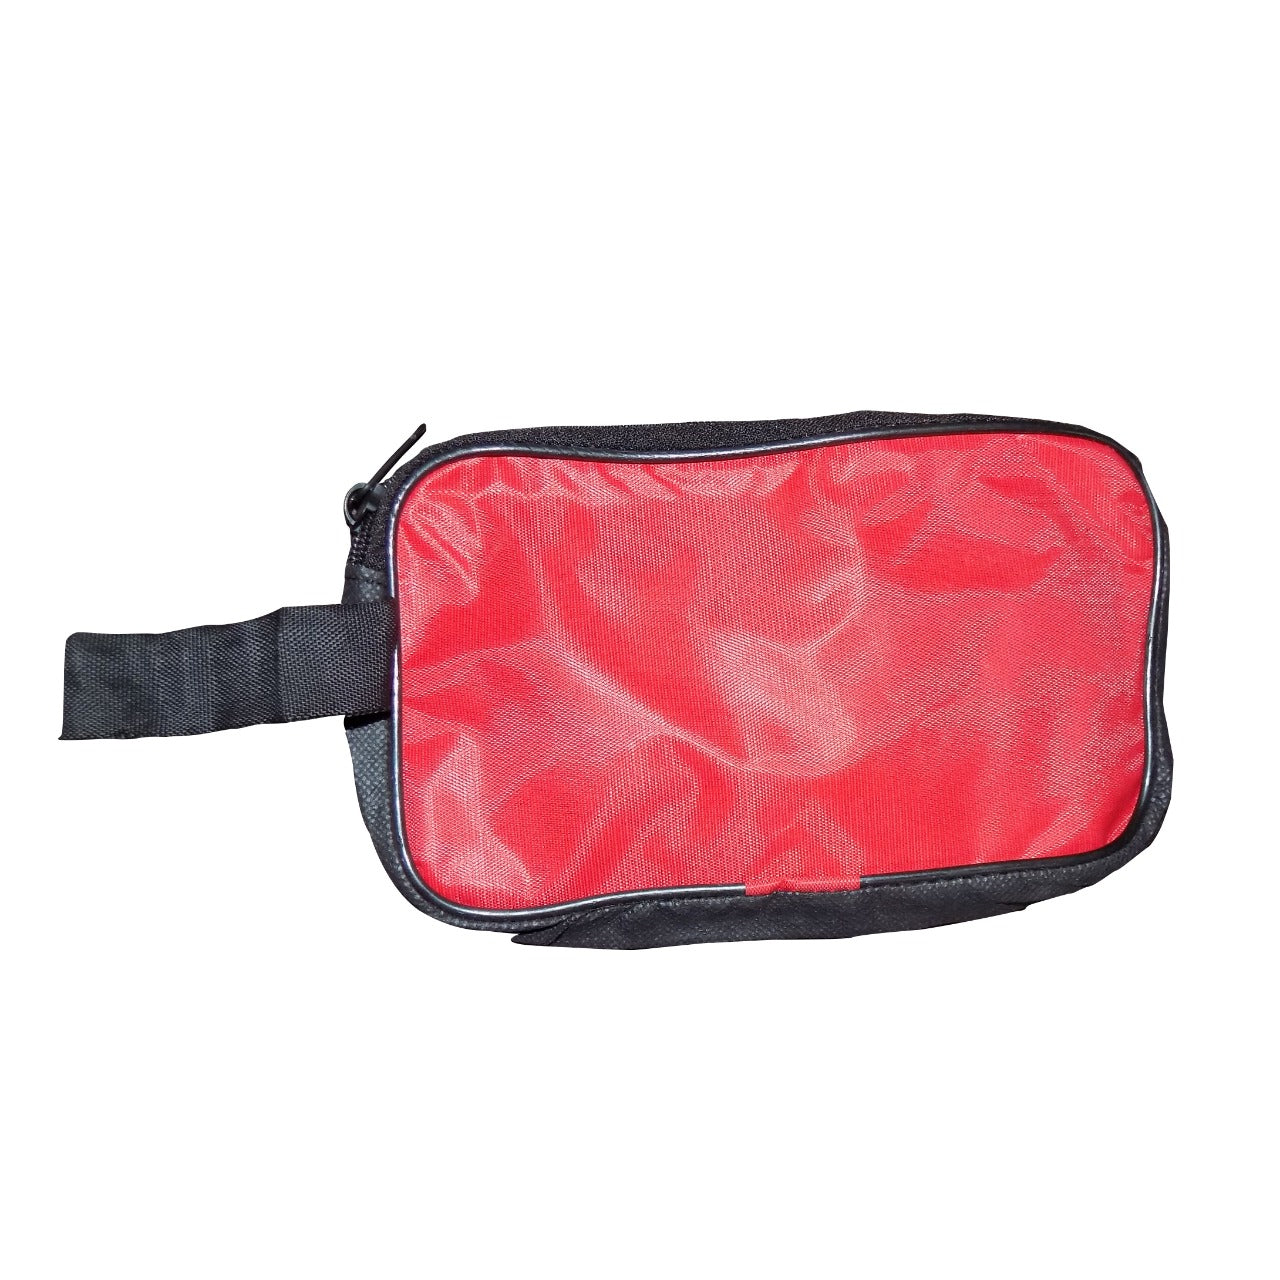 0845 Portable Travel Hand Pouch/Shaving Kit Bag for Multipurpose Use (Red) DeoDap